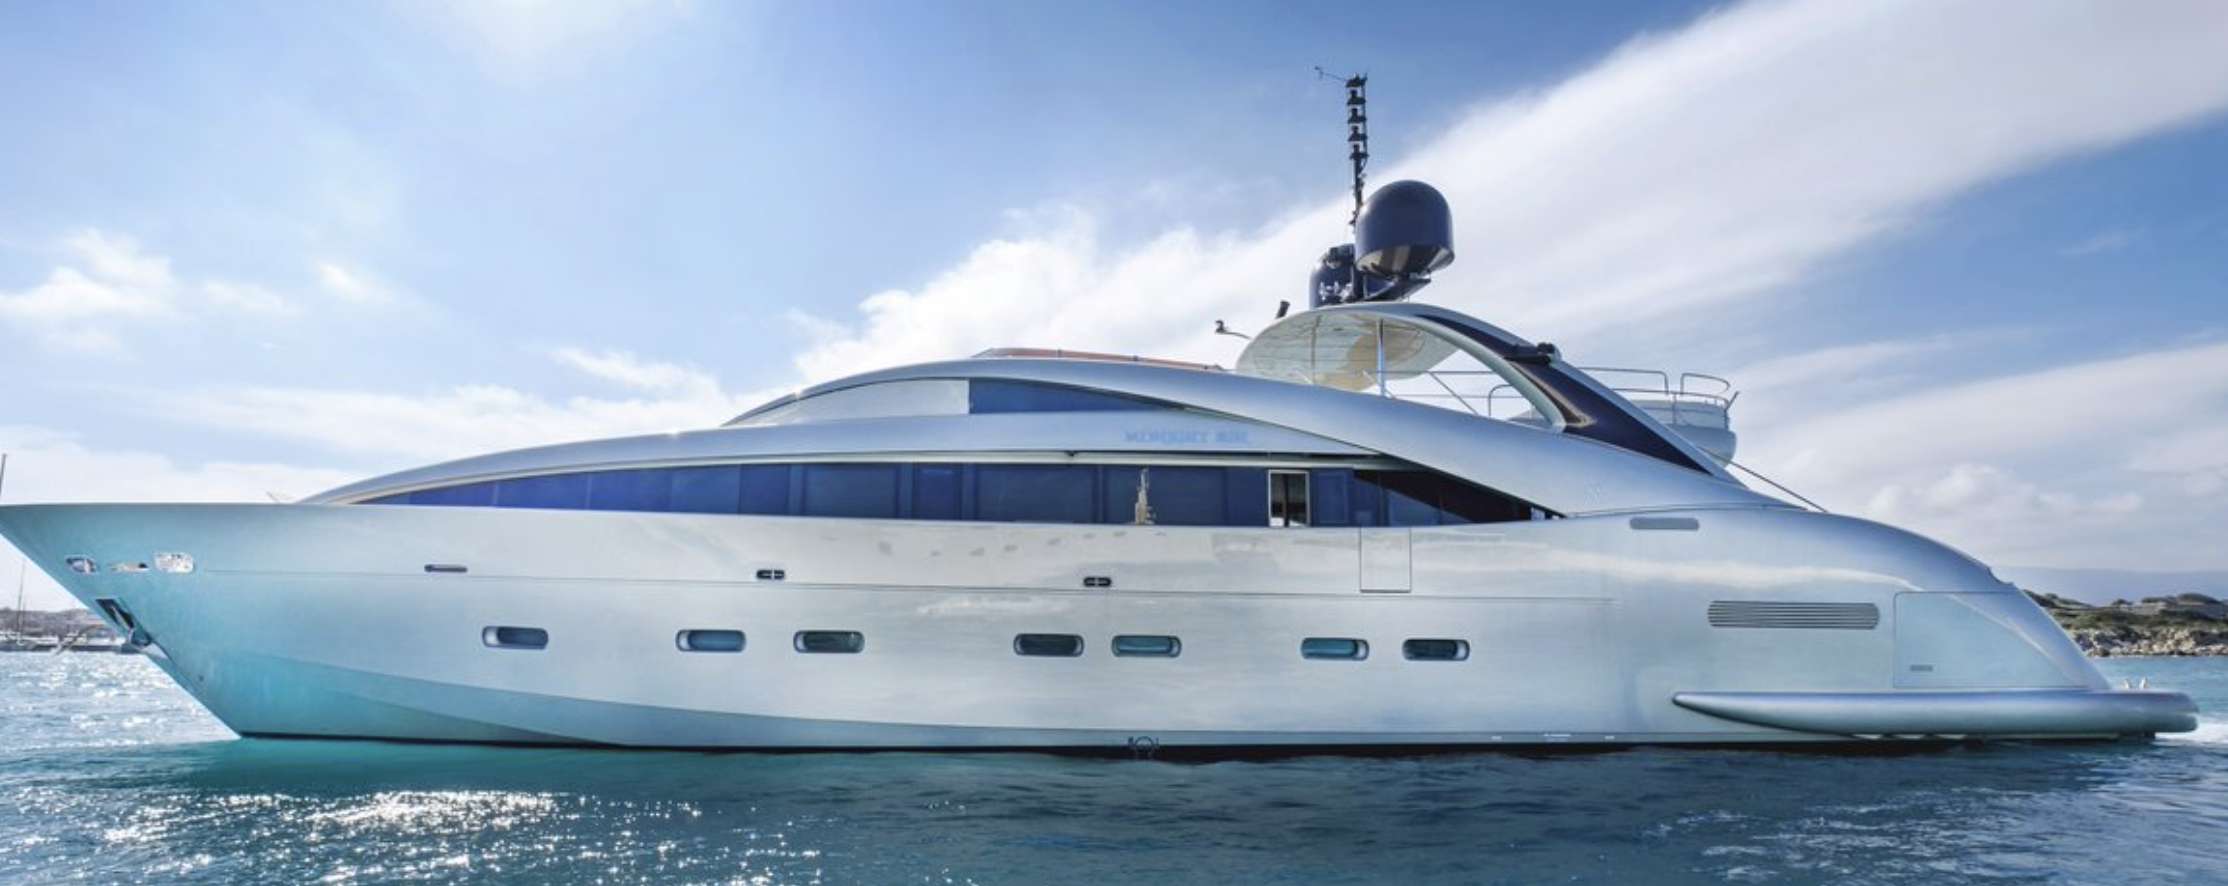 YCM 120 - Yacht Charter La Savina & Boat hire in Riviera, Corsica, Sardinia, Spain, Balearics, Caribbean 4